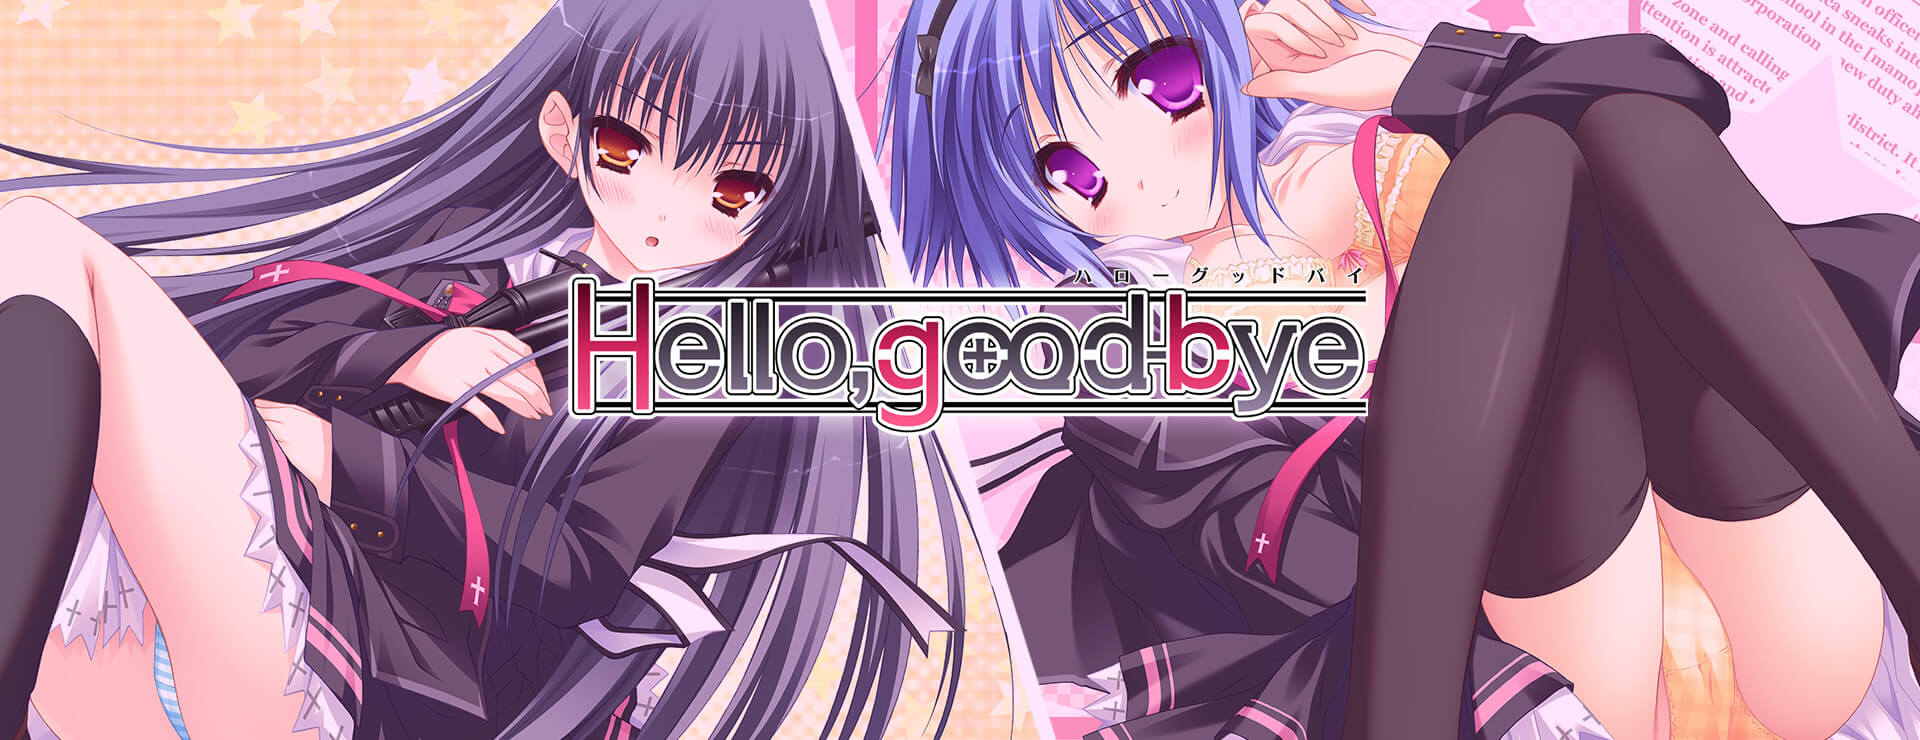 Hello, Goodbye - ビジュアルノベル ゲーム